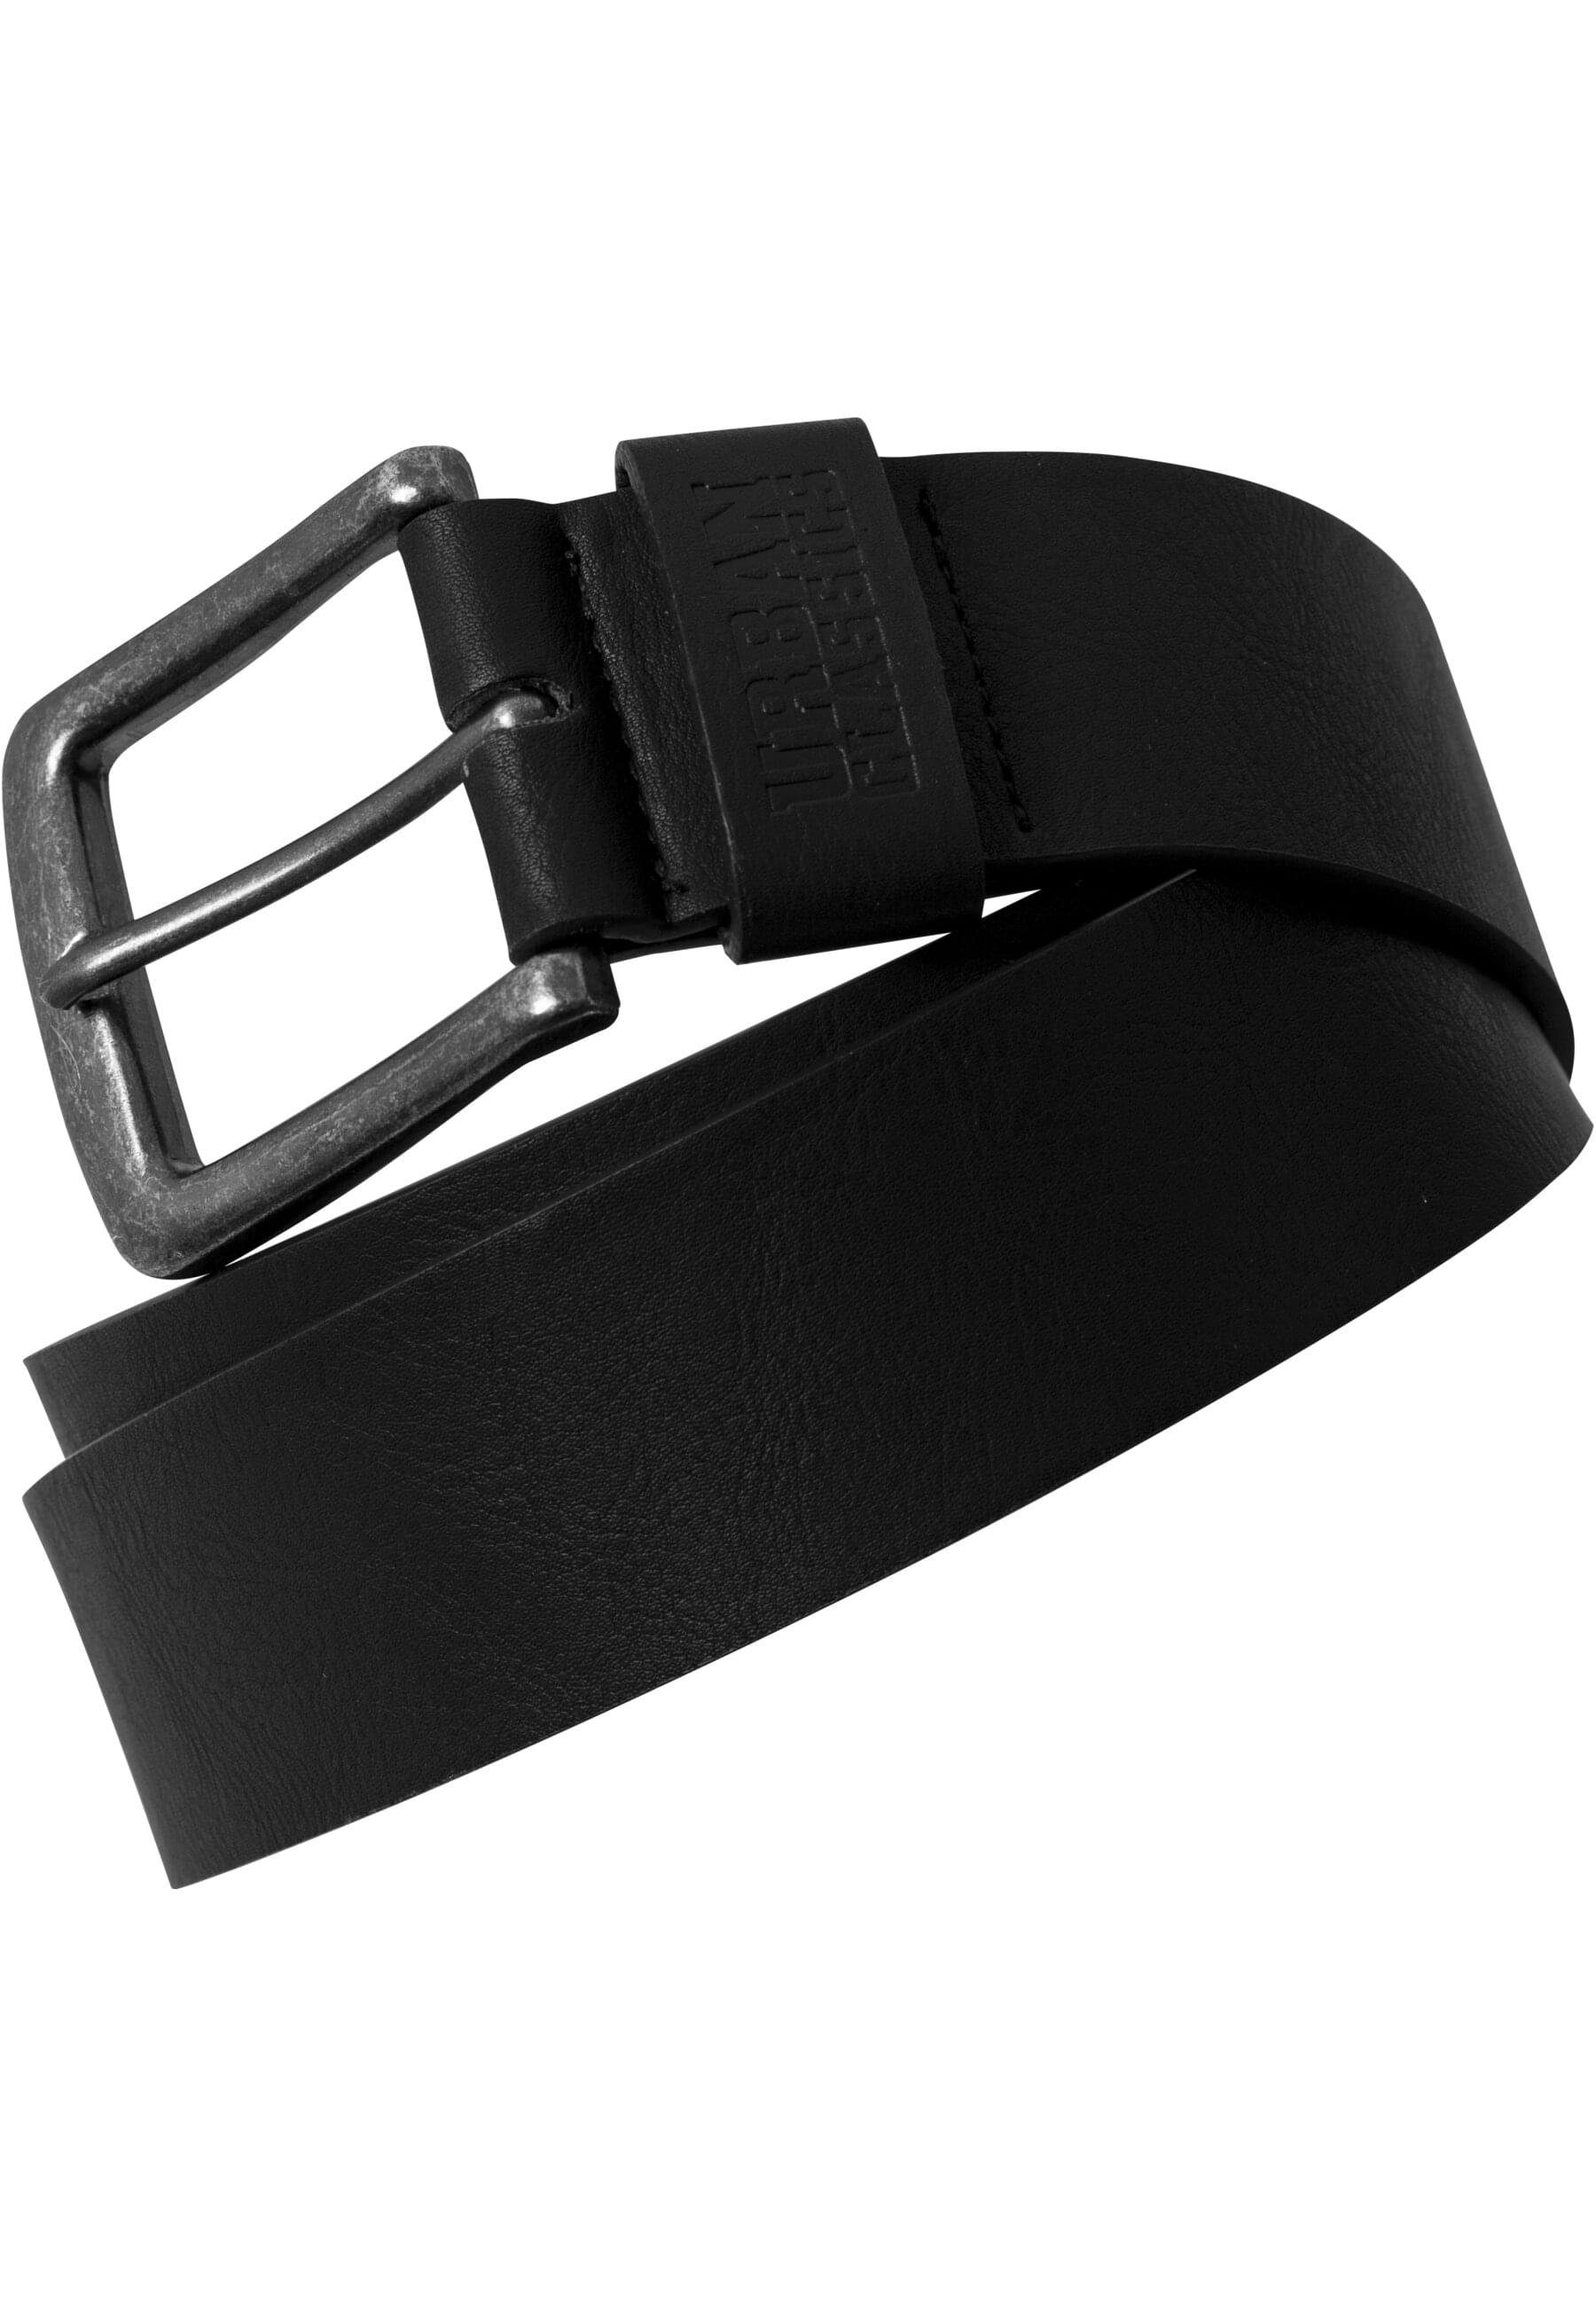 Hüftgürtel Unisex Imitation Leather URBAN schwarz CLASSICS Belt